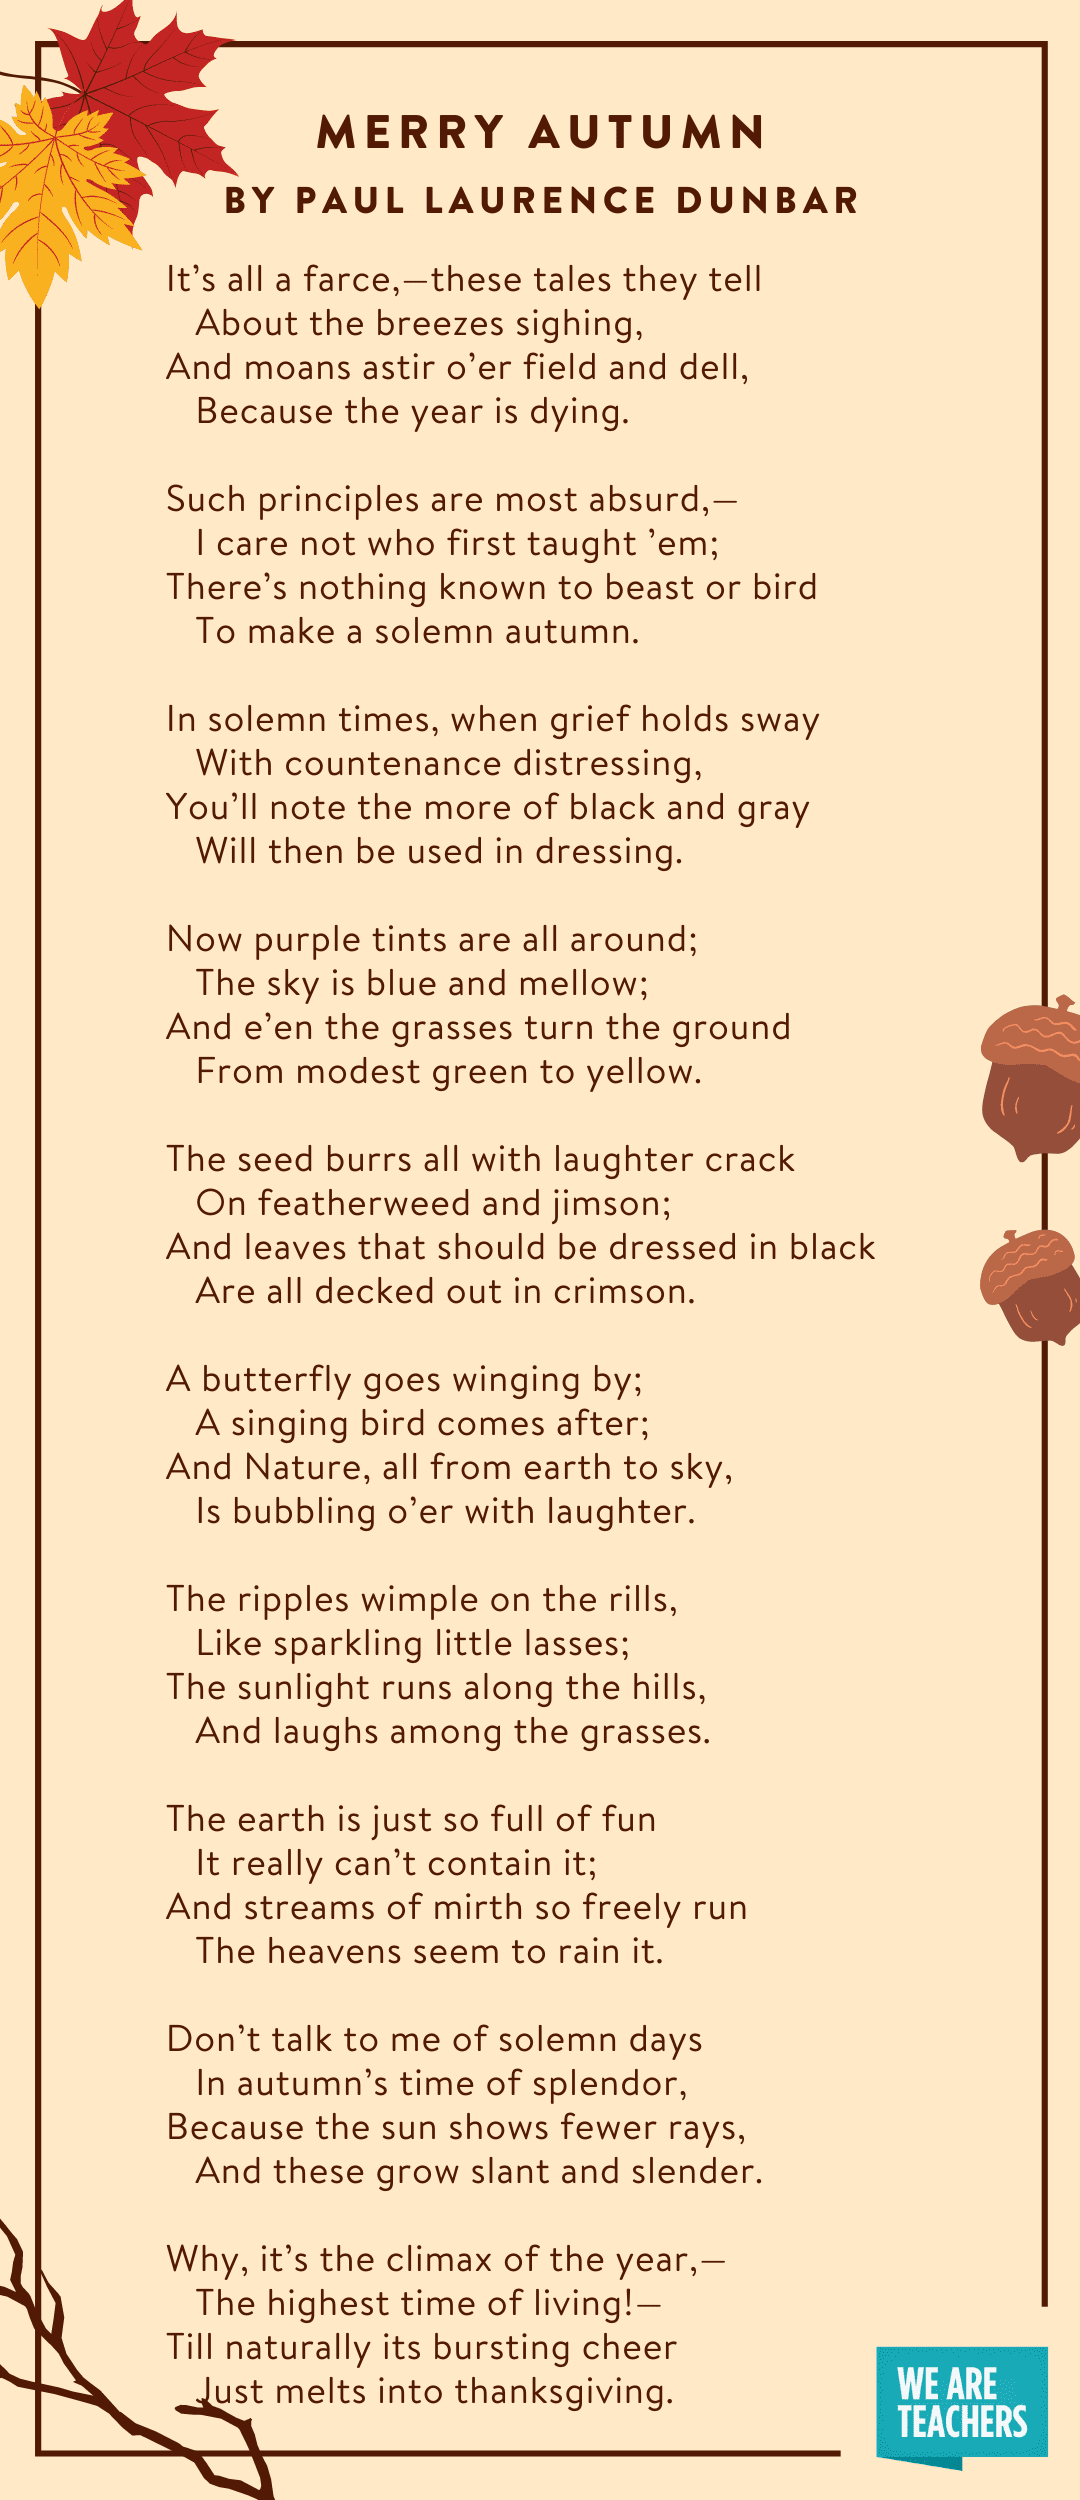 Merry Autumn fall poems